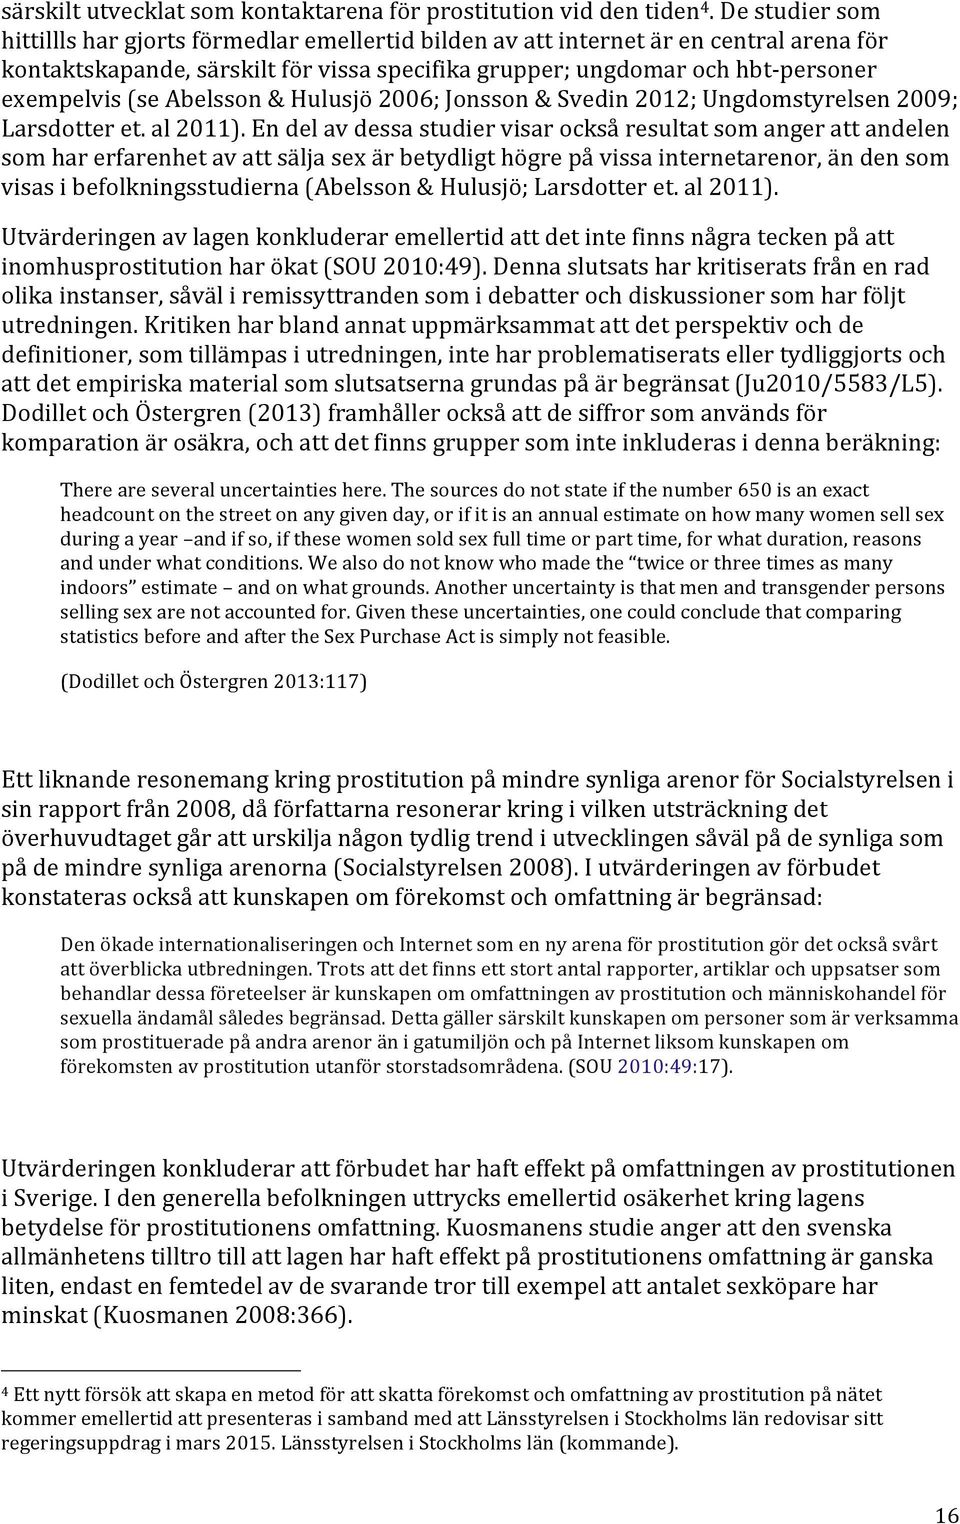 (se Abelsson & Hulusjö 2006; Jonsson & Svedin 2012; Ungdomstyrelsen 2009; Larsdotter et. al 2011).